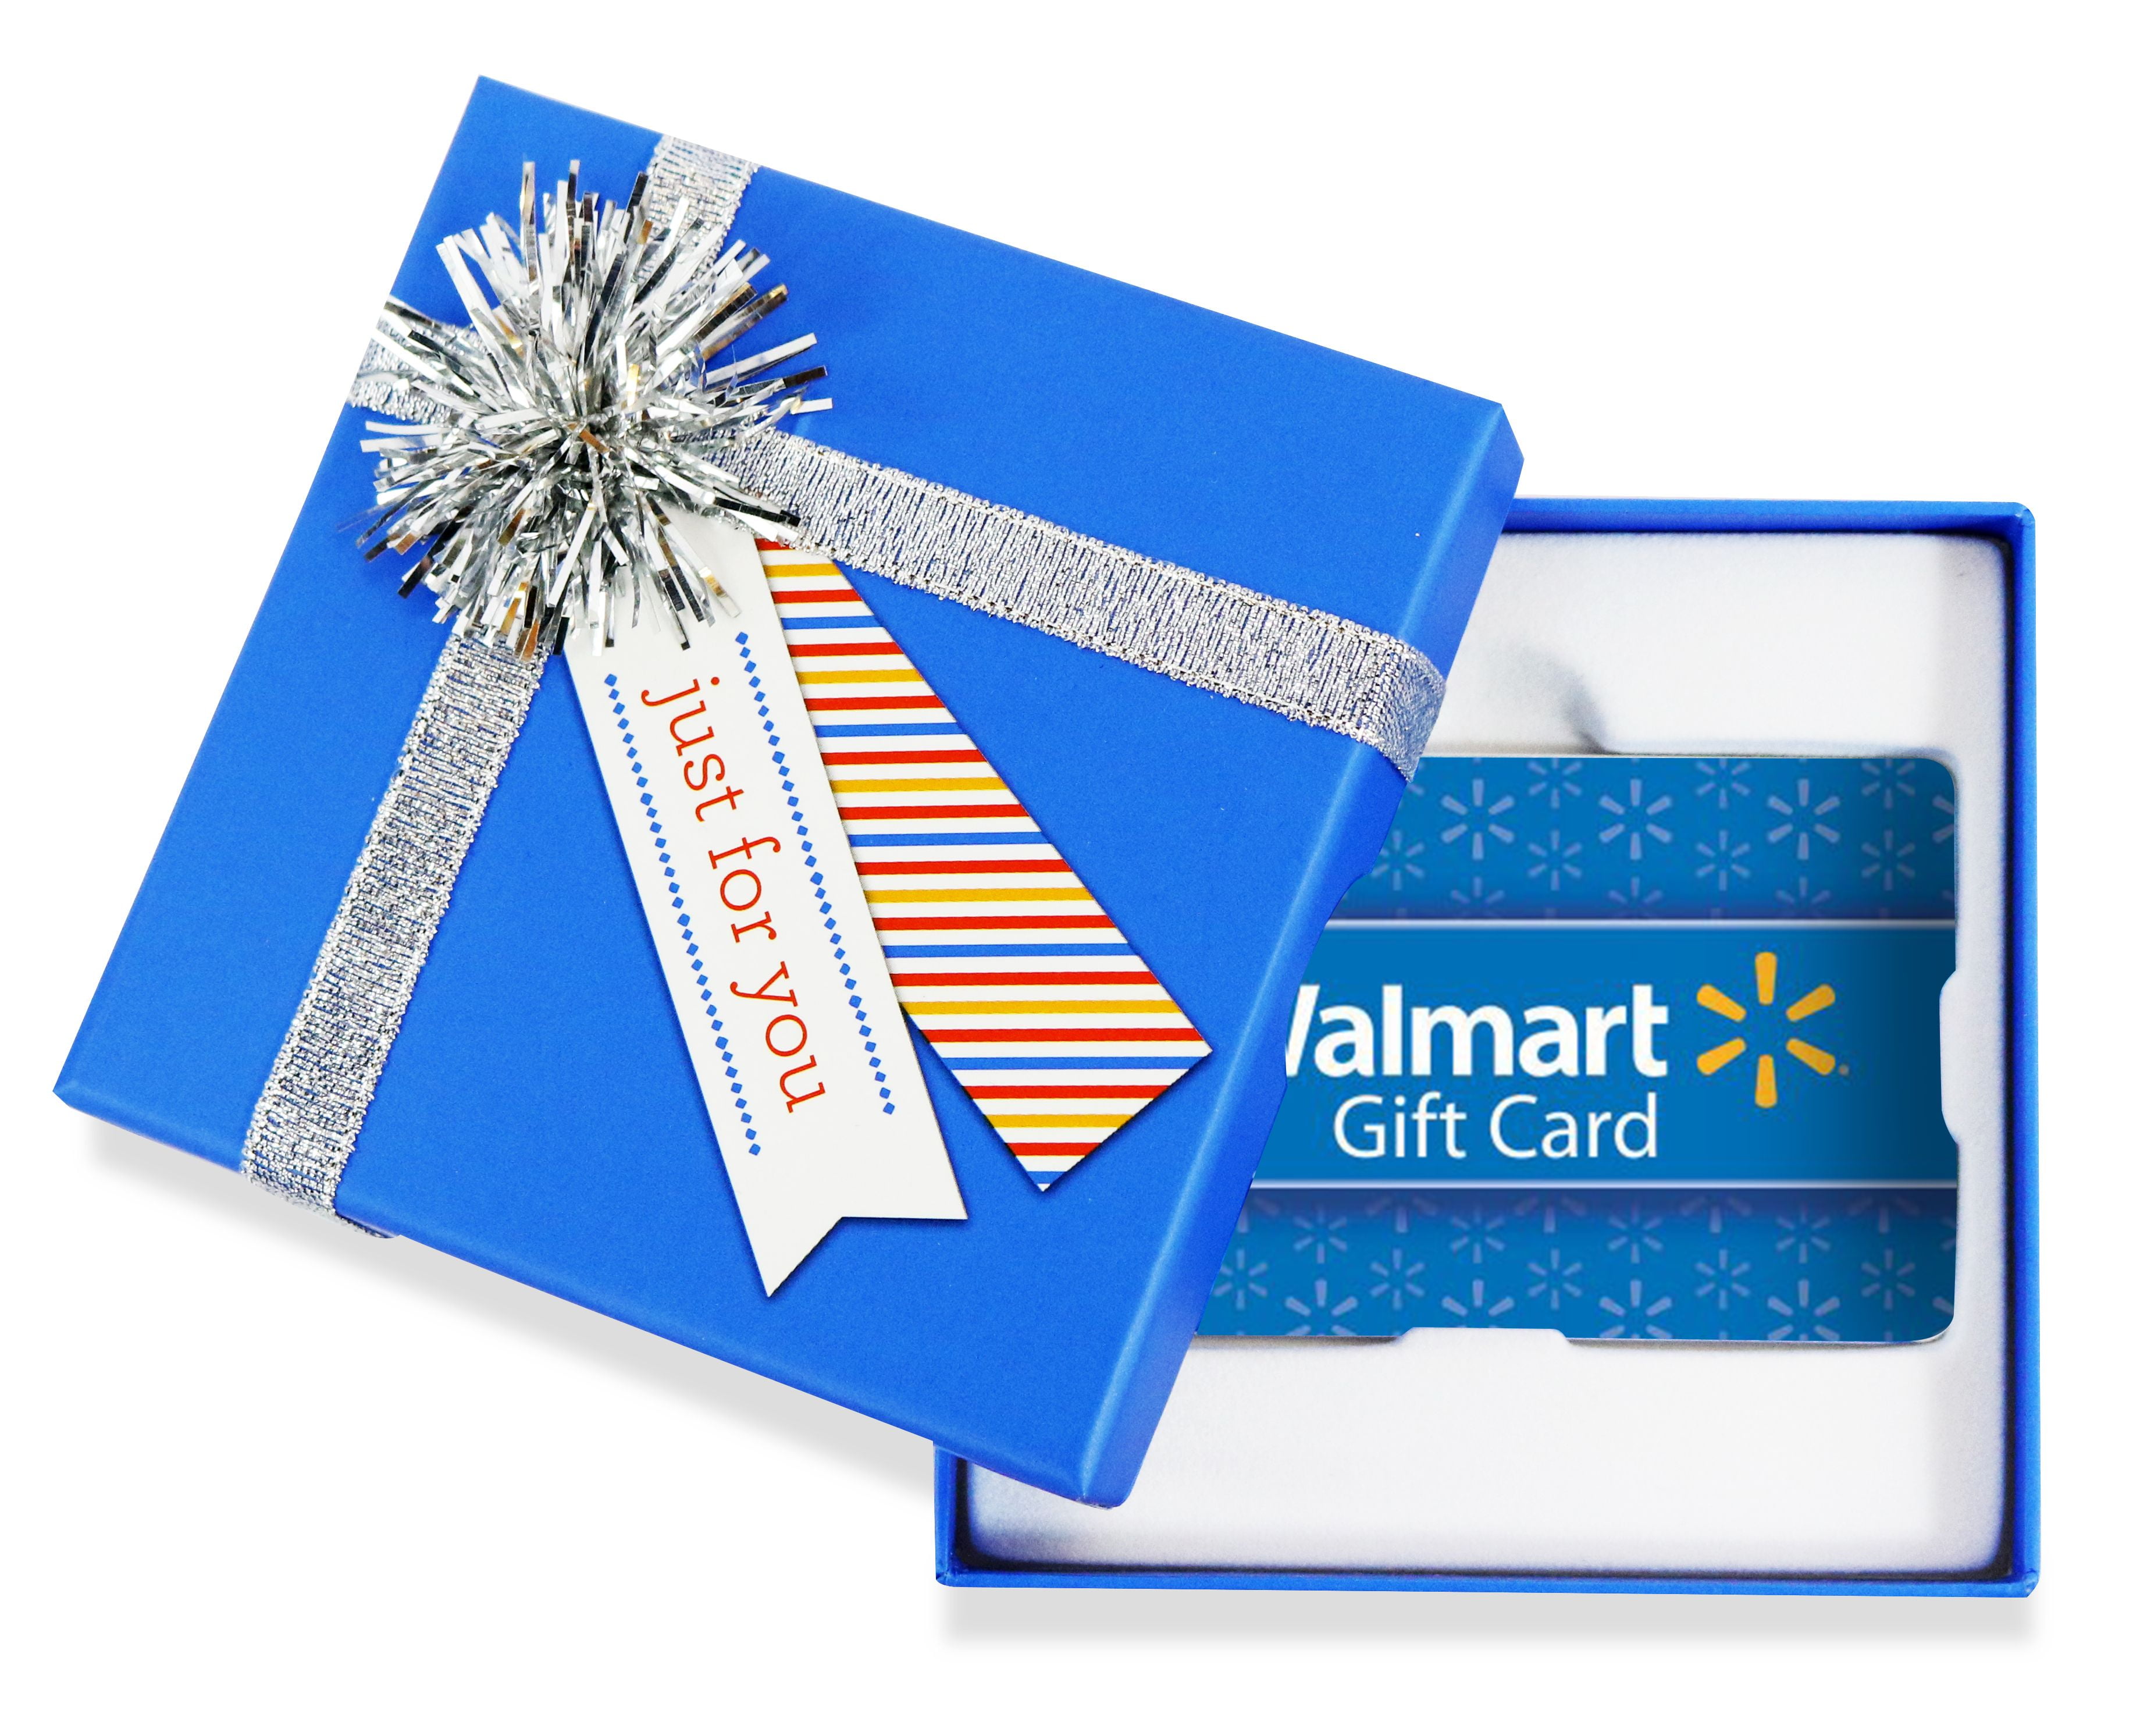 walmart-gift-card-in-a-blue-gift-box-walmart